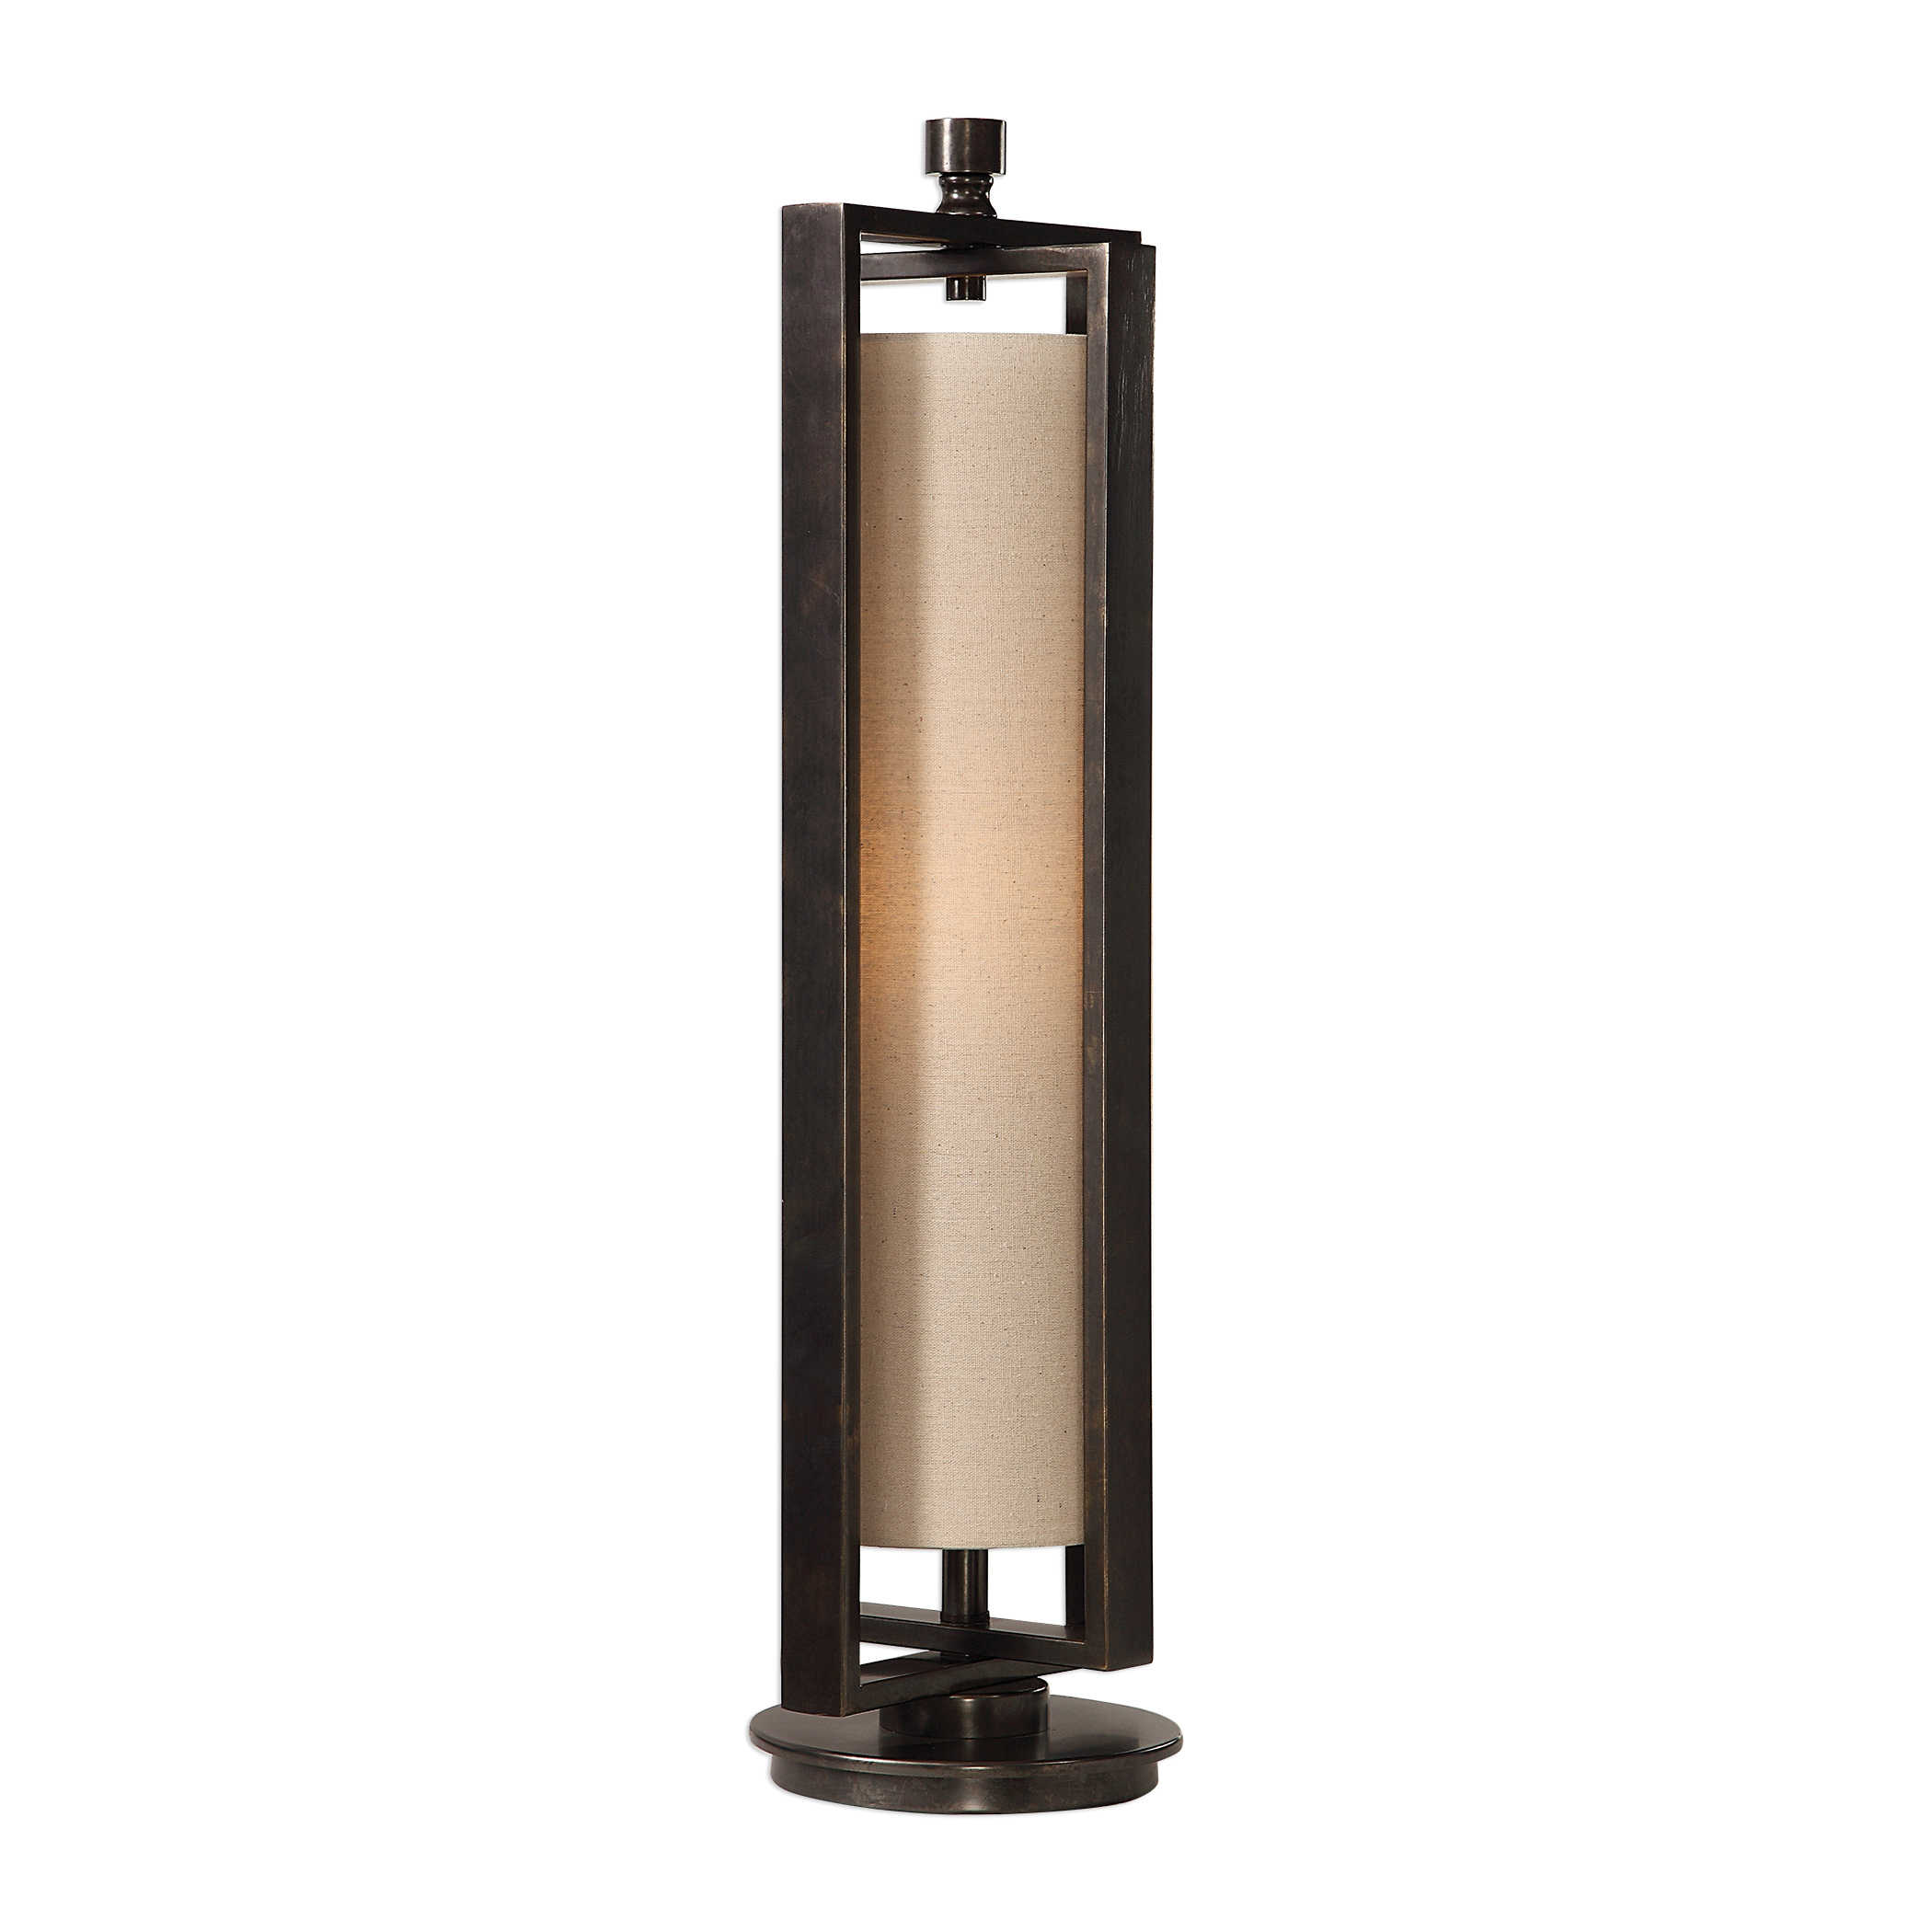 Лампа LANIER ACCENT LAMP 29664-1 Uttermost США